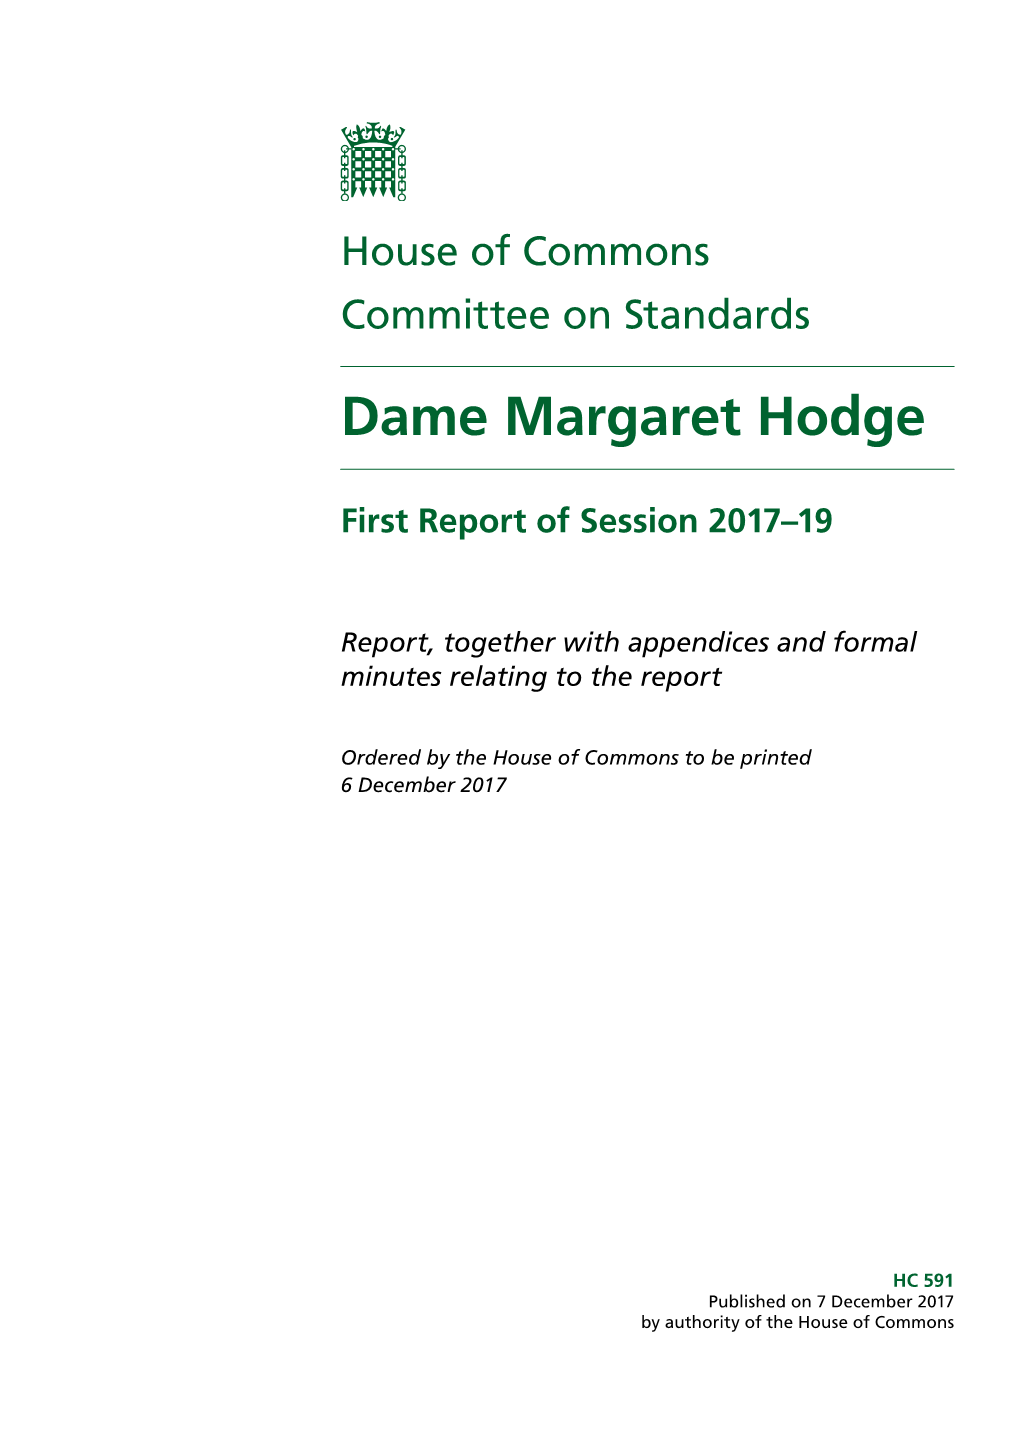 Dame Margaret Hodge